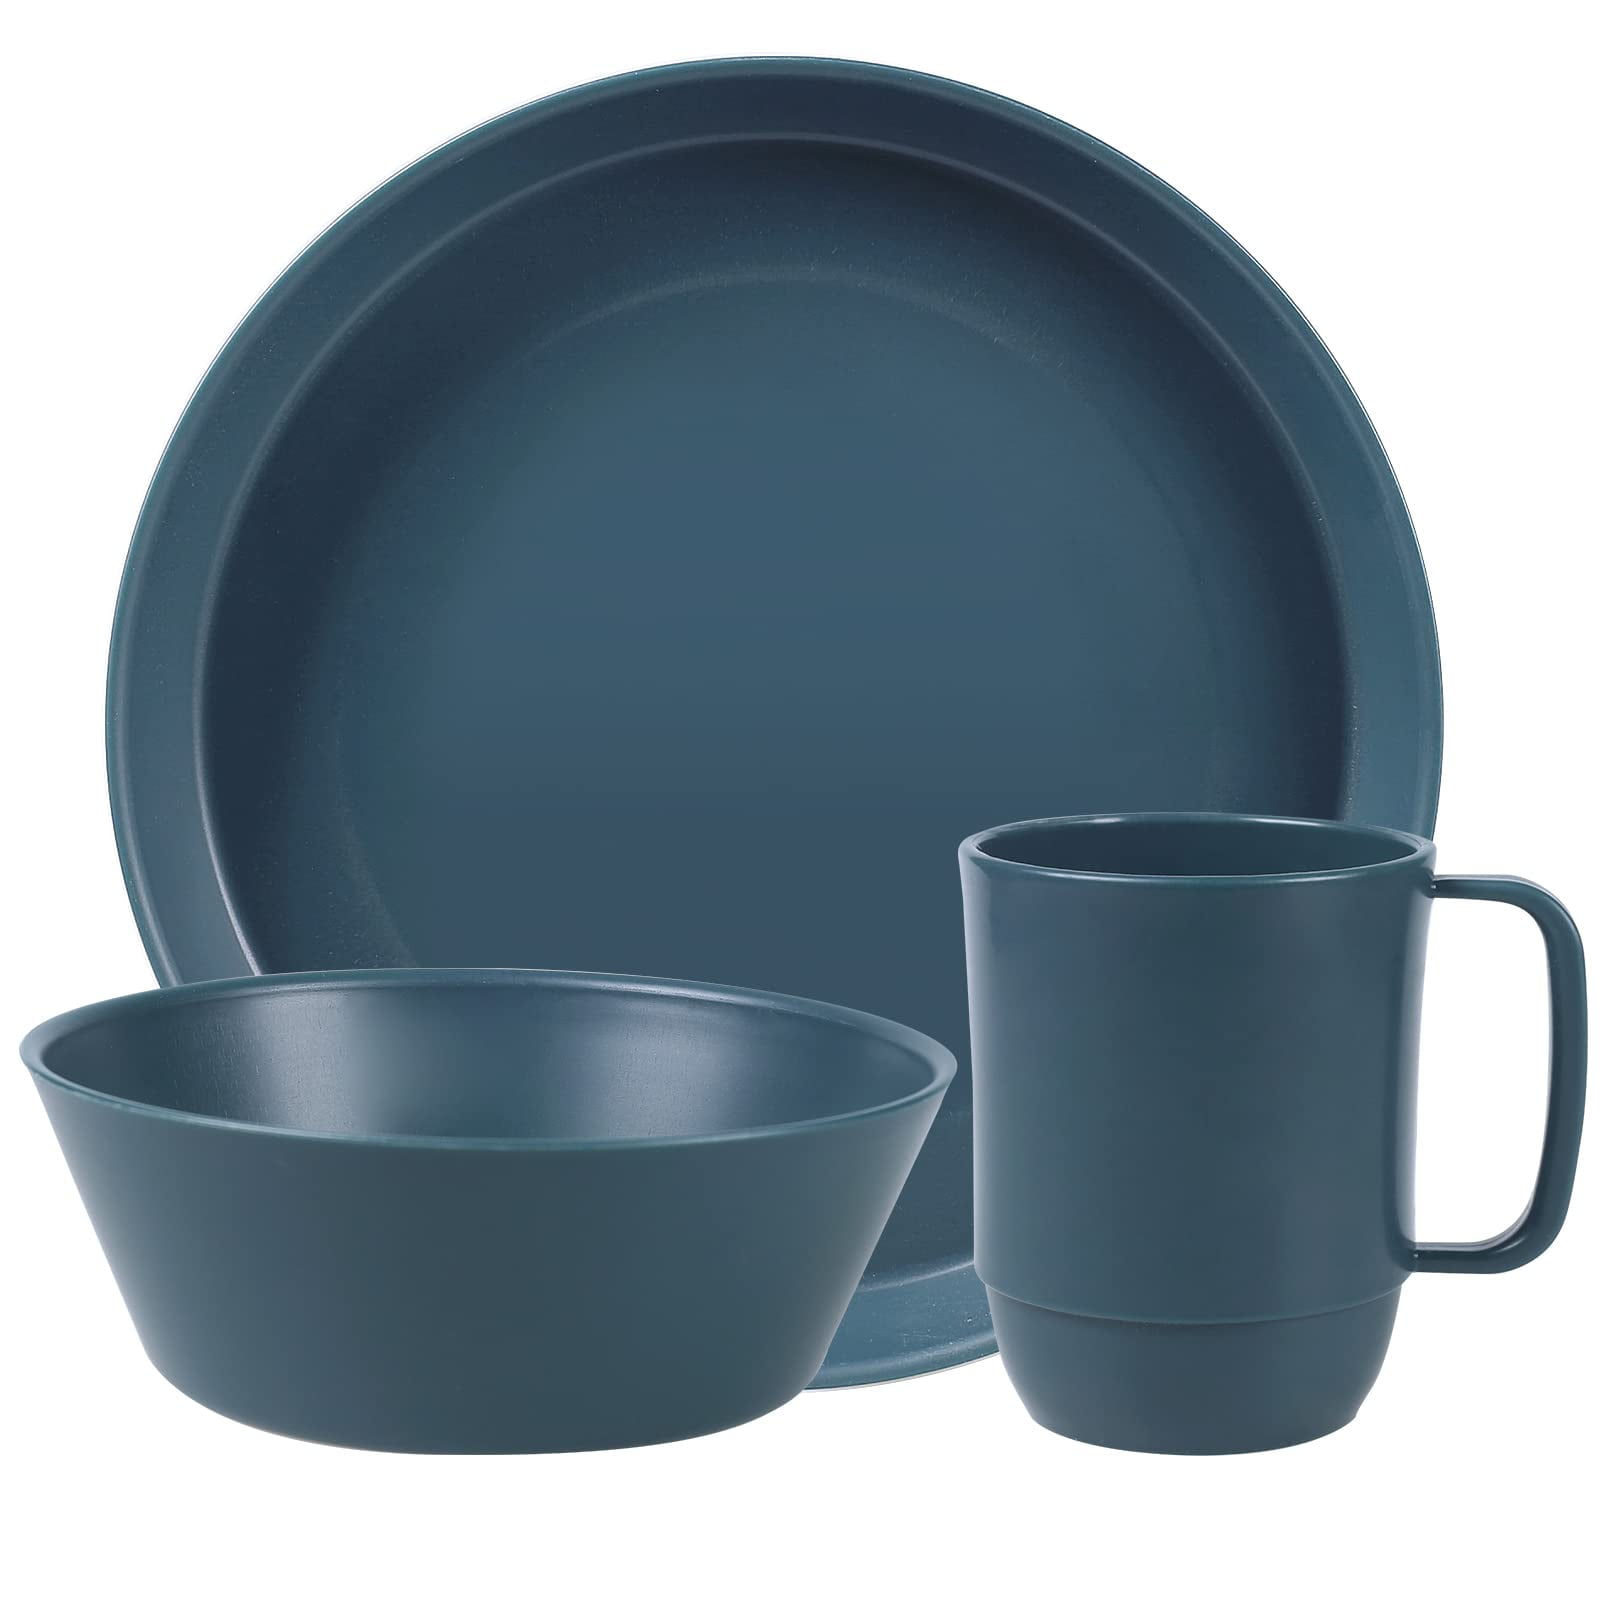  ULVEOL Set of 2 Dark Blue Microwave Bowl Holder